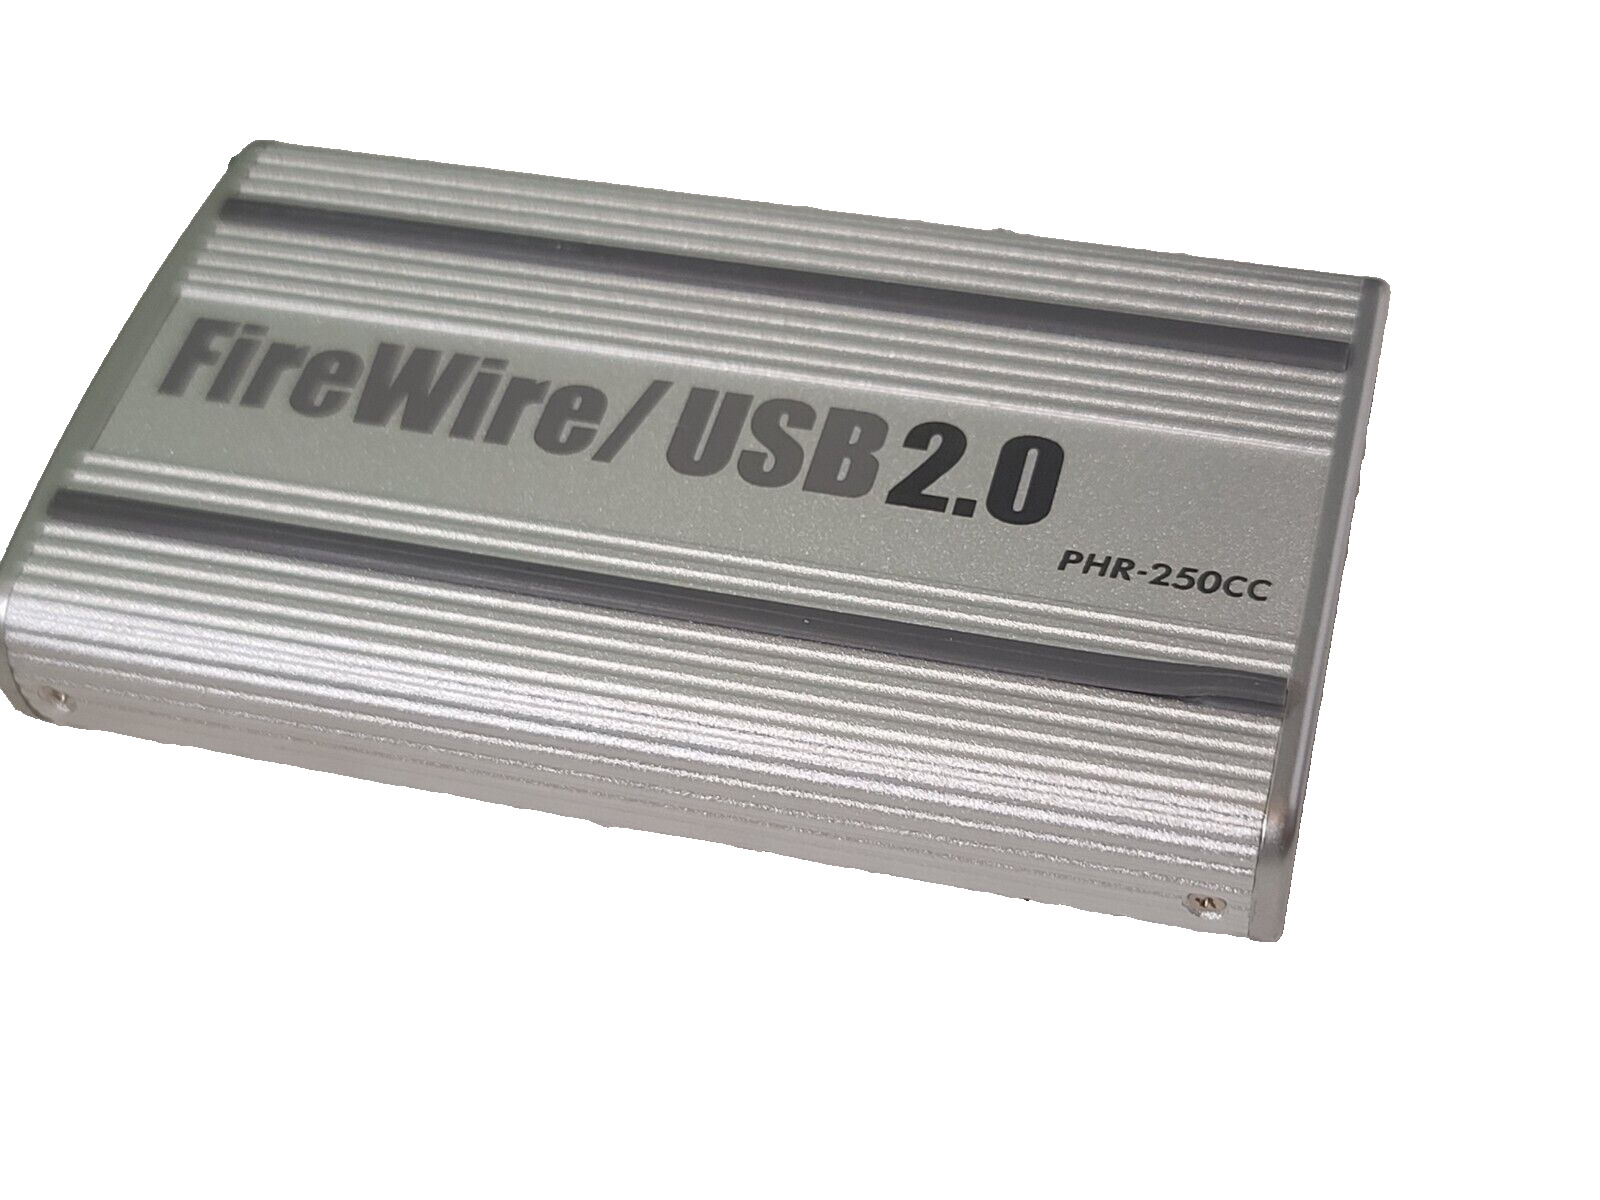 PHR-250CC FireWire USB 2.0 Portable Hard Drive With Hitachi Apple HDD 80GB 2.5in